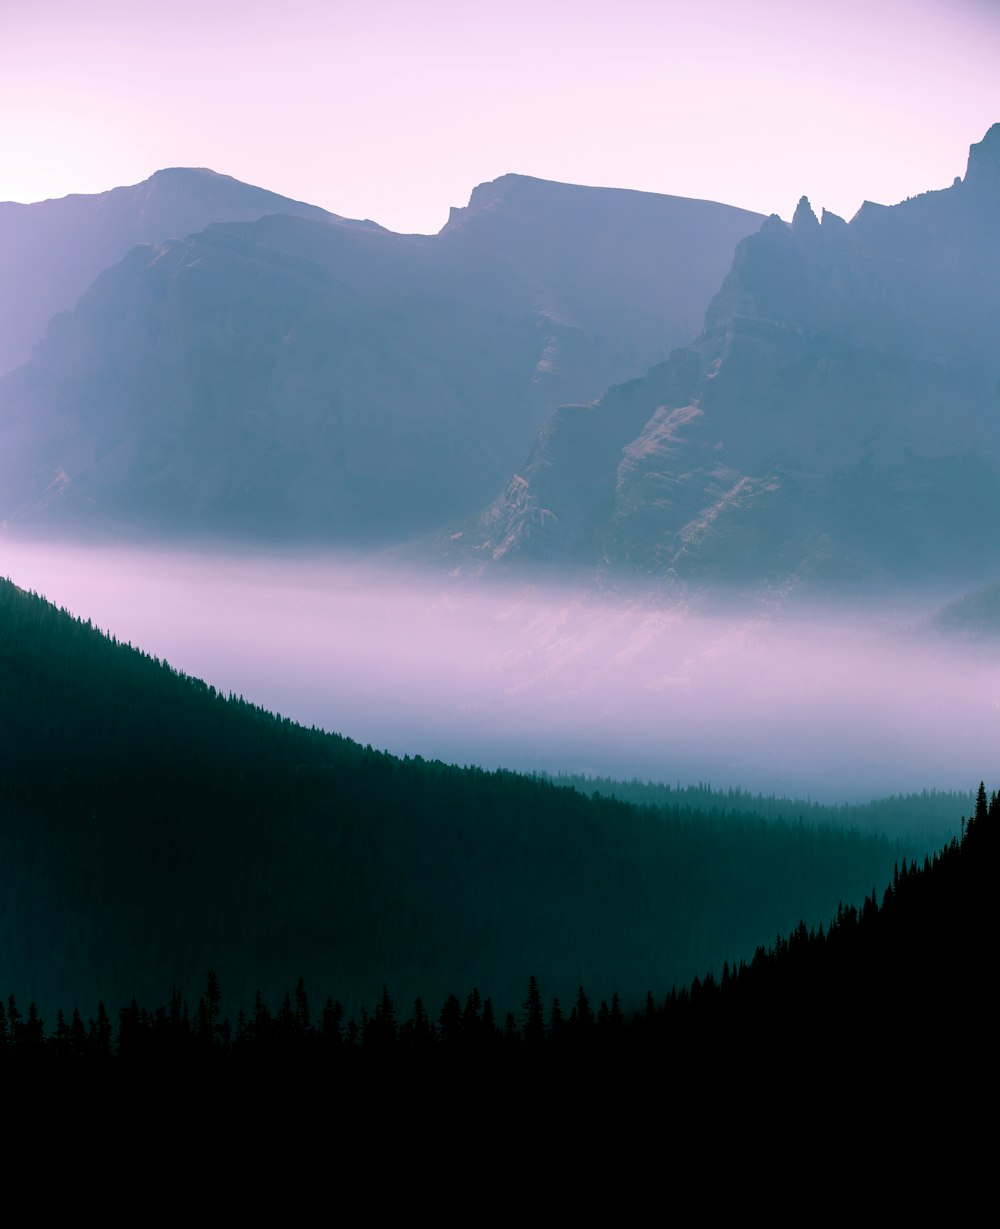 foggy mountain during daytime